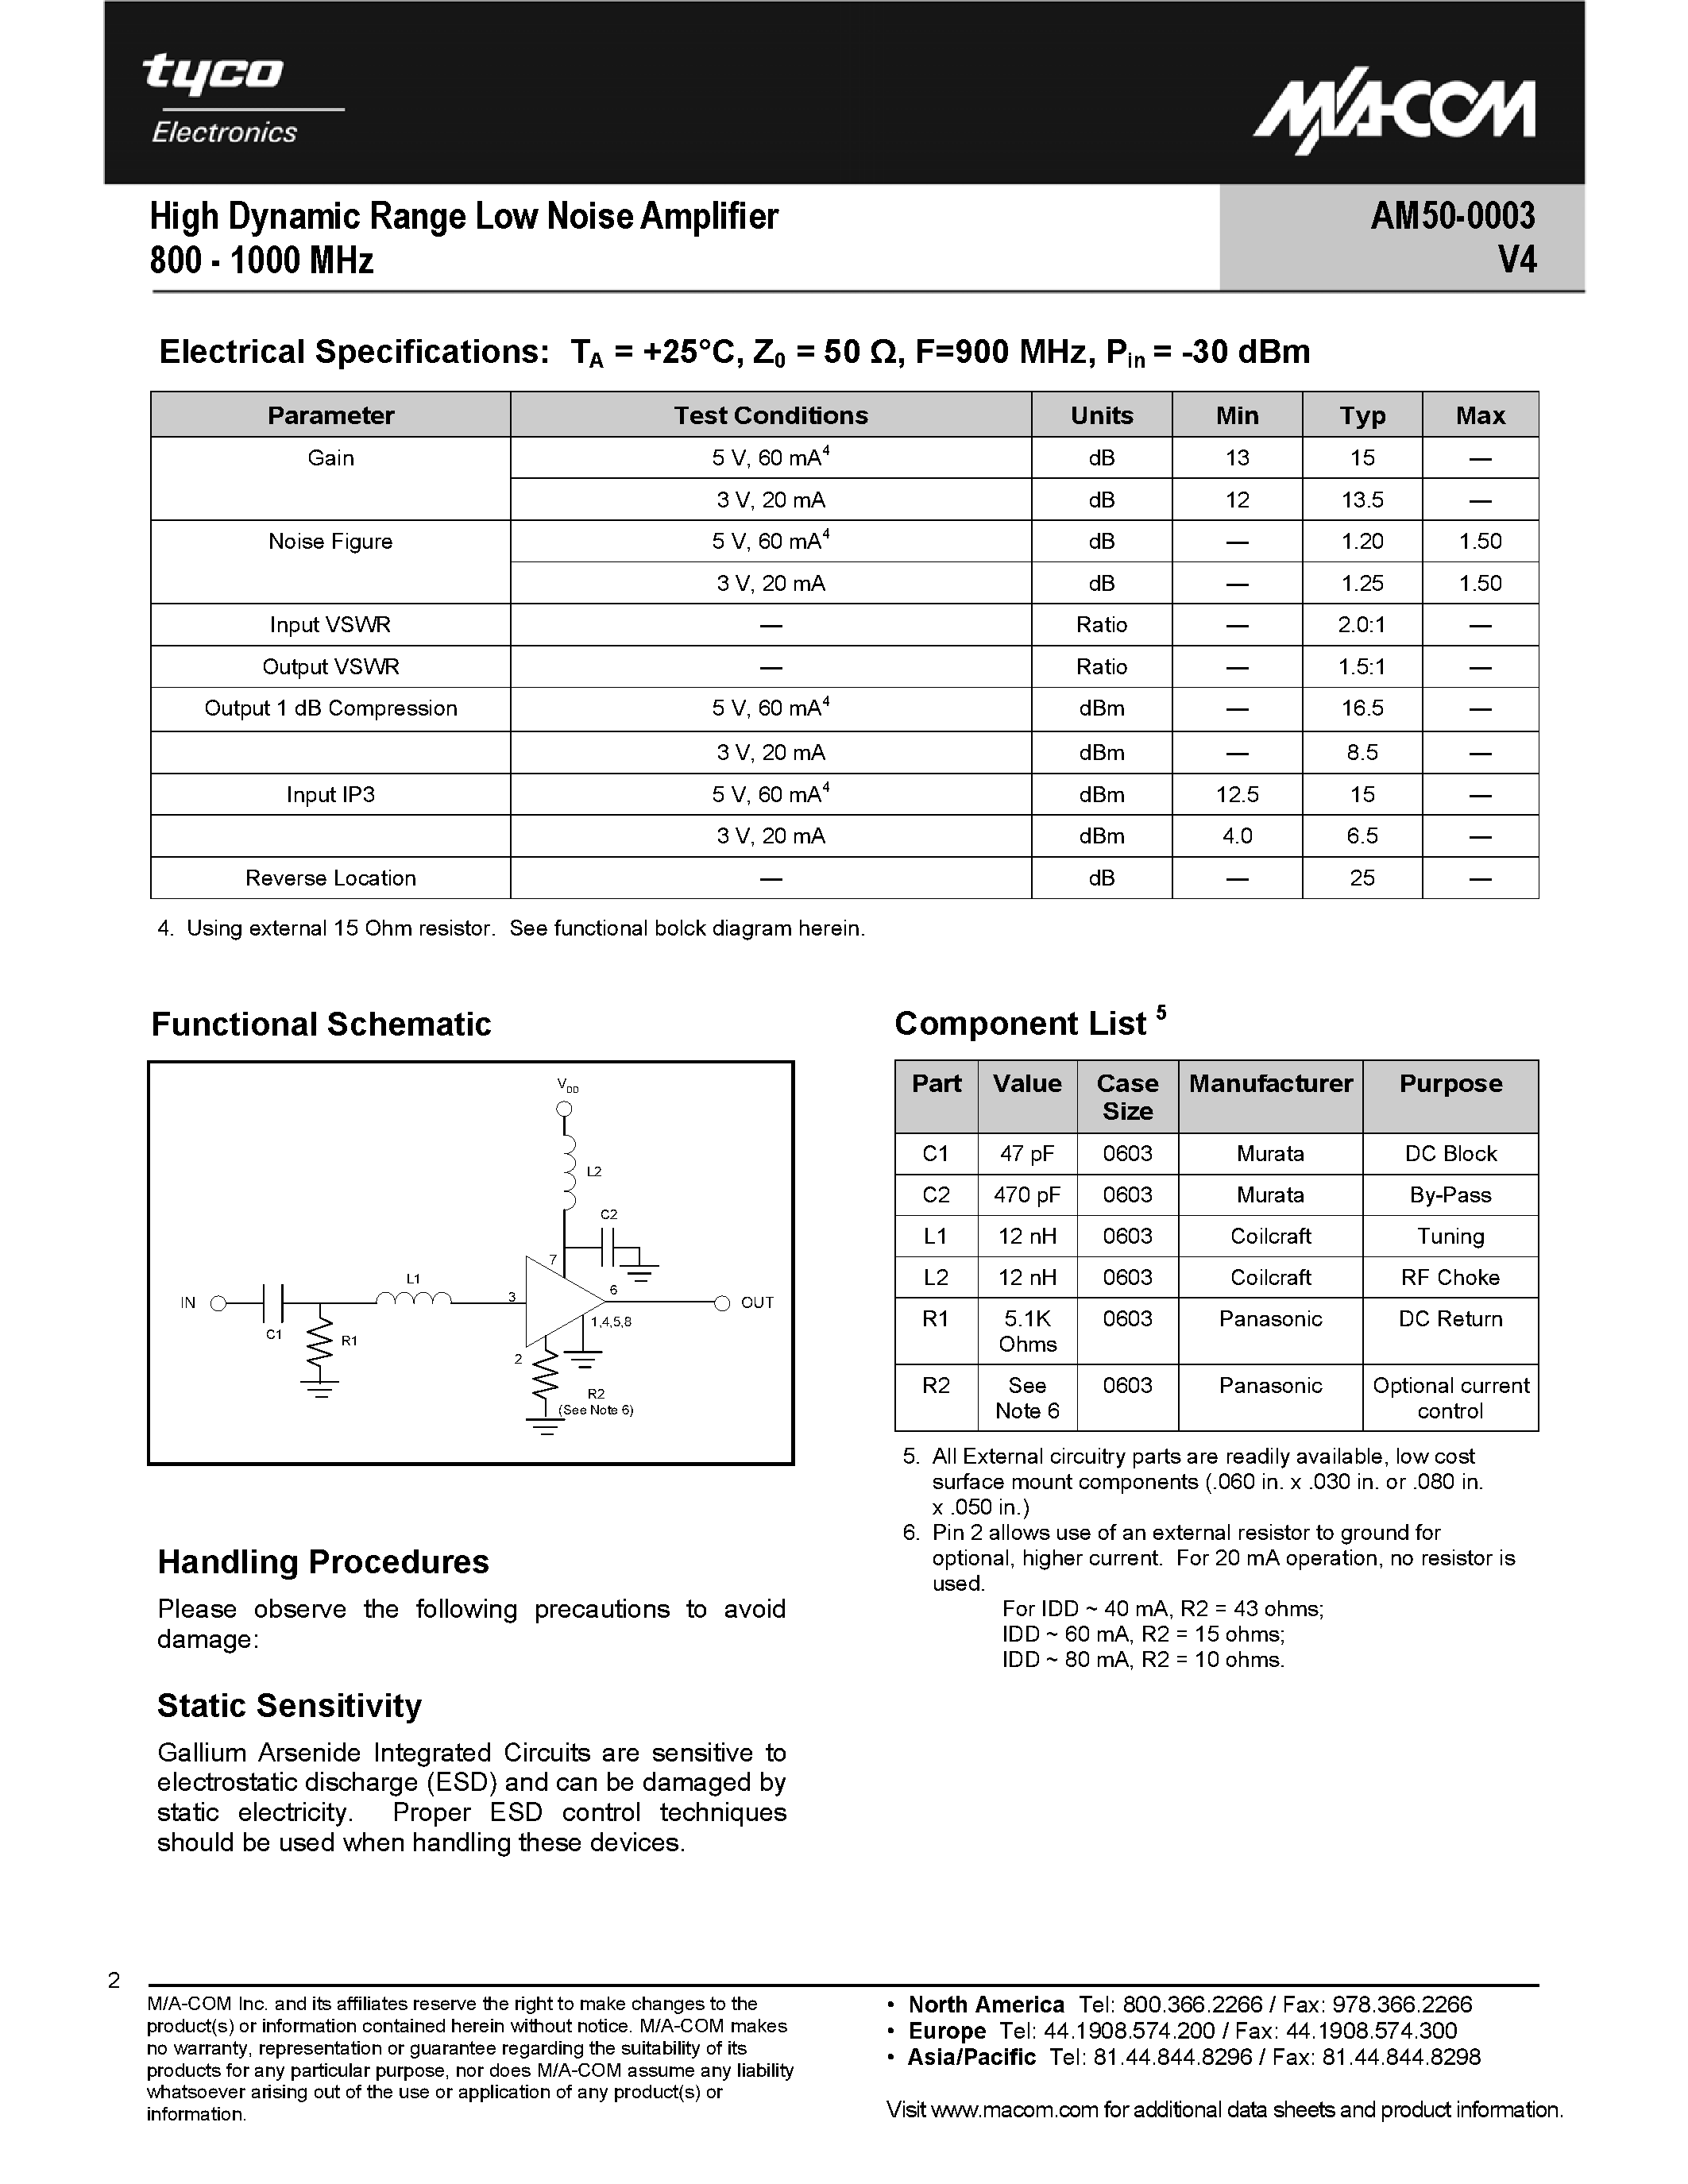 Datasheet AM50-0003V4 - High Dynamic Range Low Noise Amplifier page 2